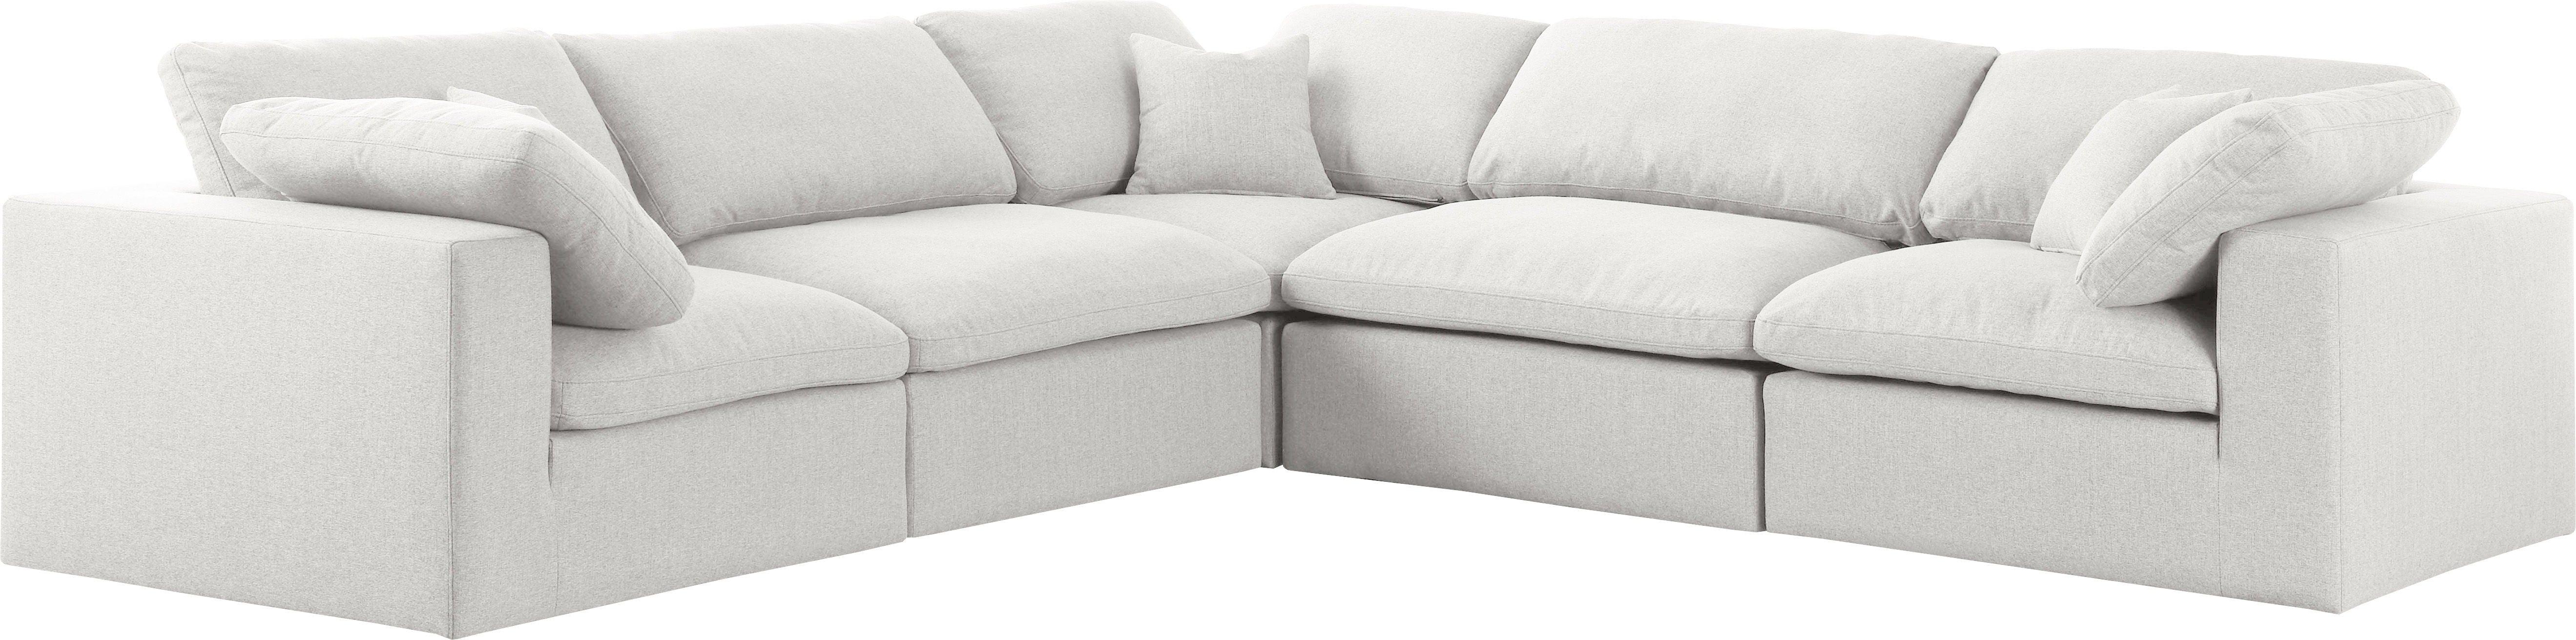 Meridian Furniture - Serene - Linen Textured Fabric Deluxe Comfort 5 Piece Modular Sectional - Cream - 5th Avenue Furniture